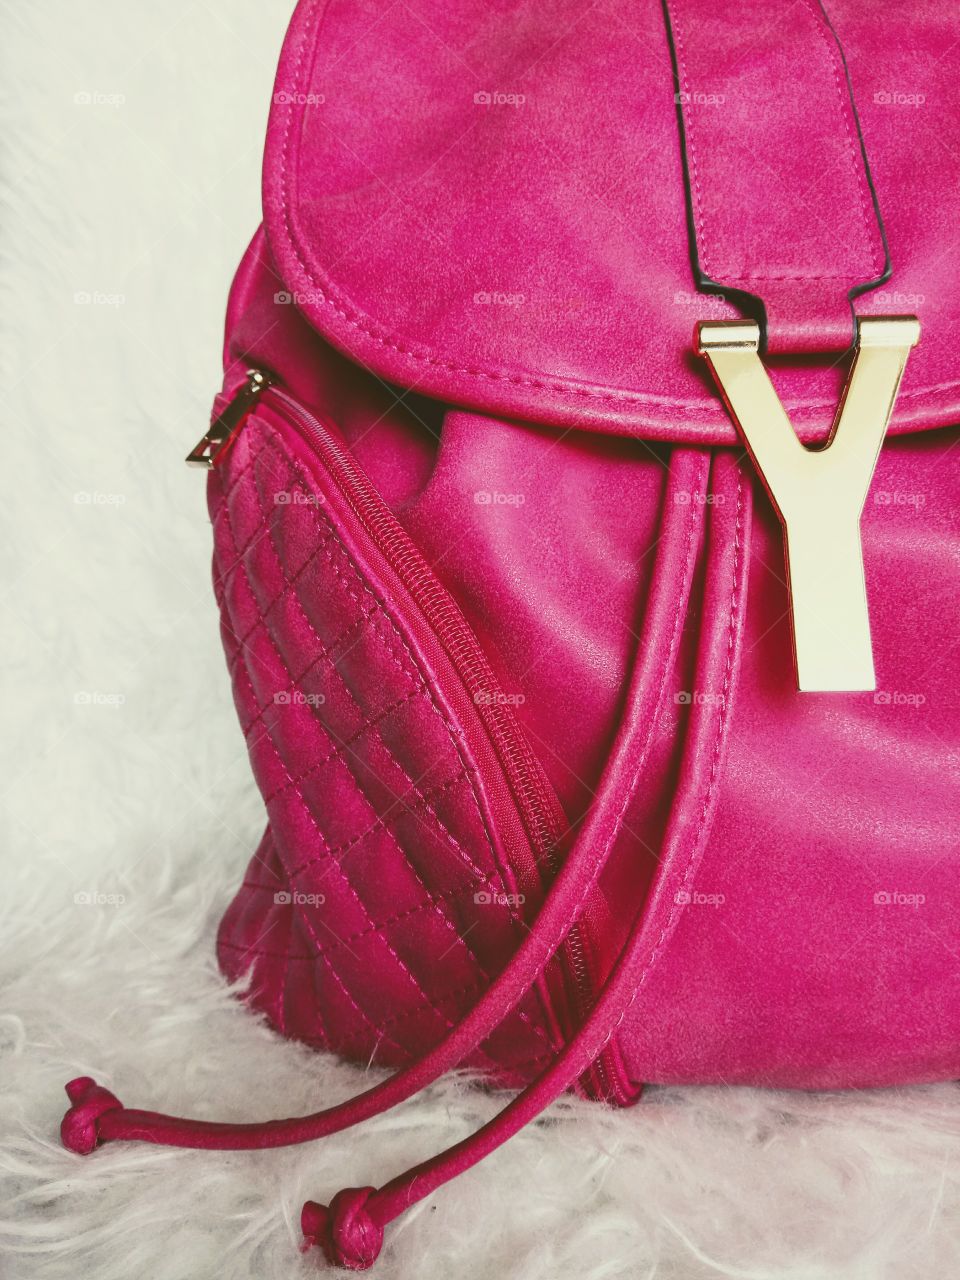 The pink bag